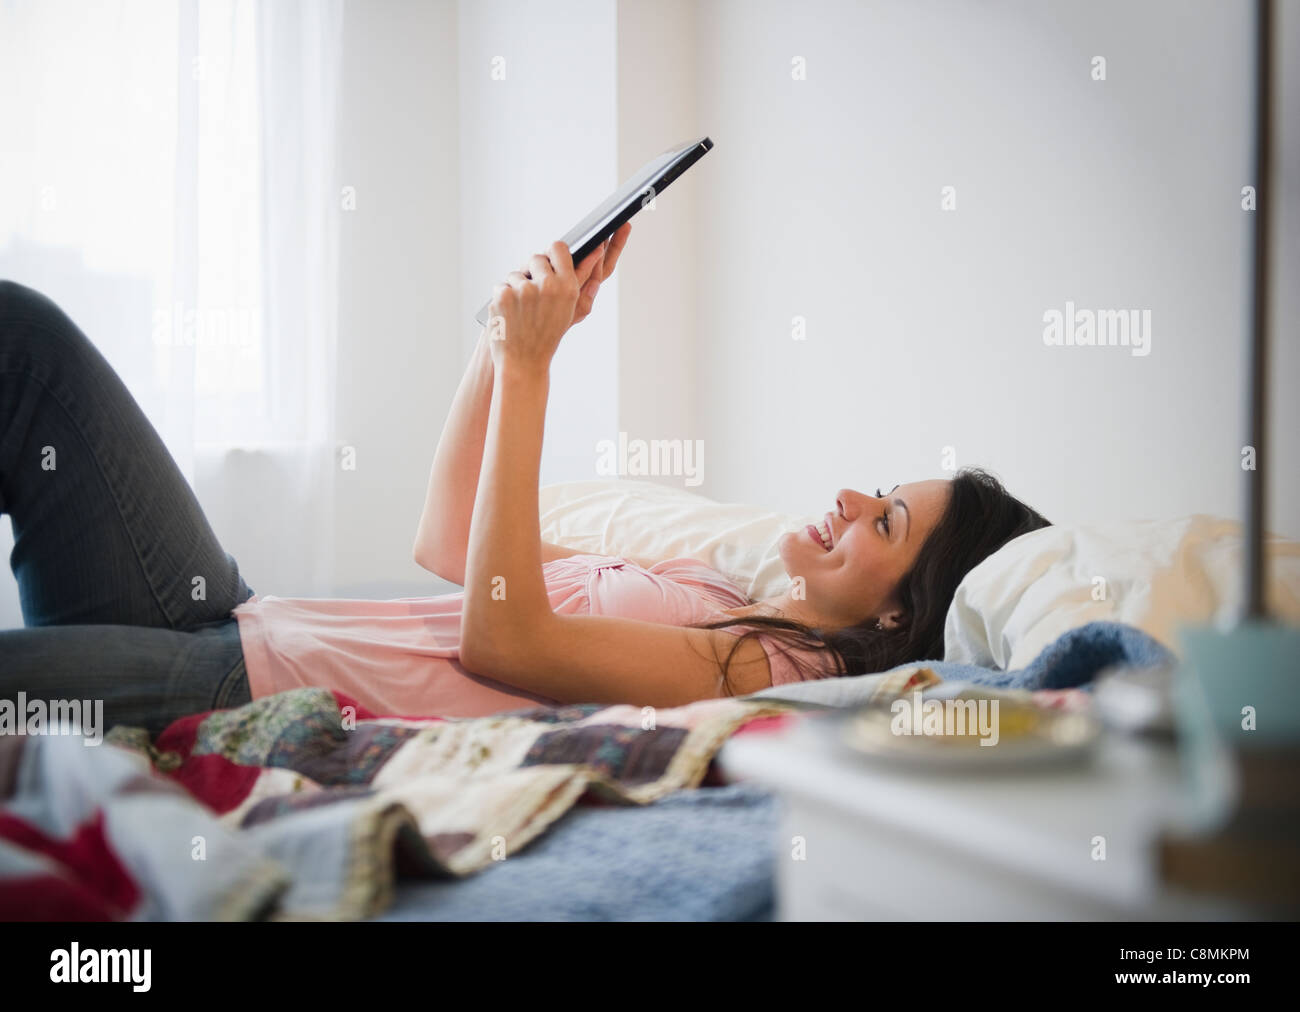 Brazilian woman using digital tablet in bed Stock Photo